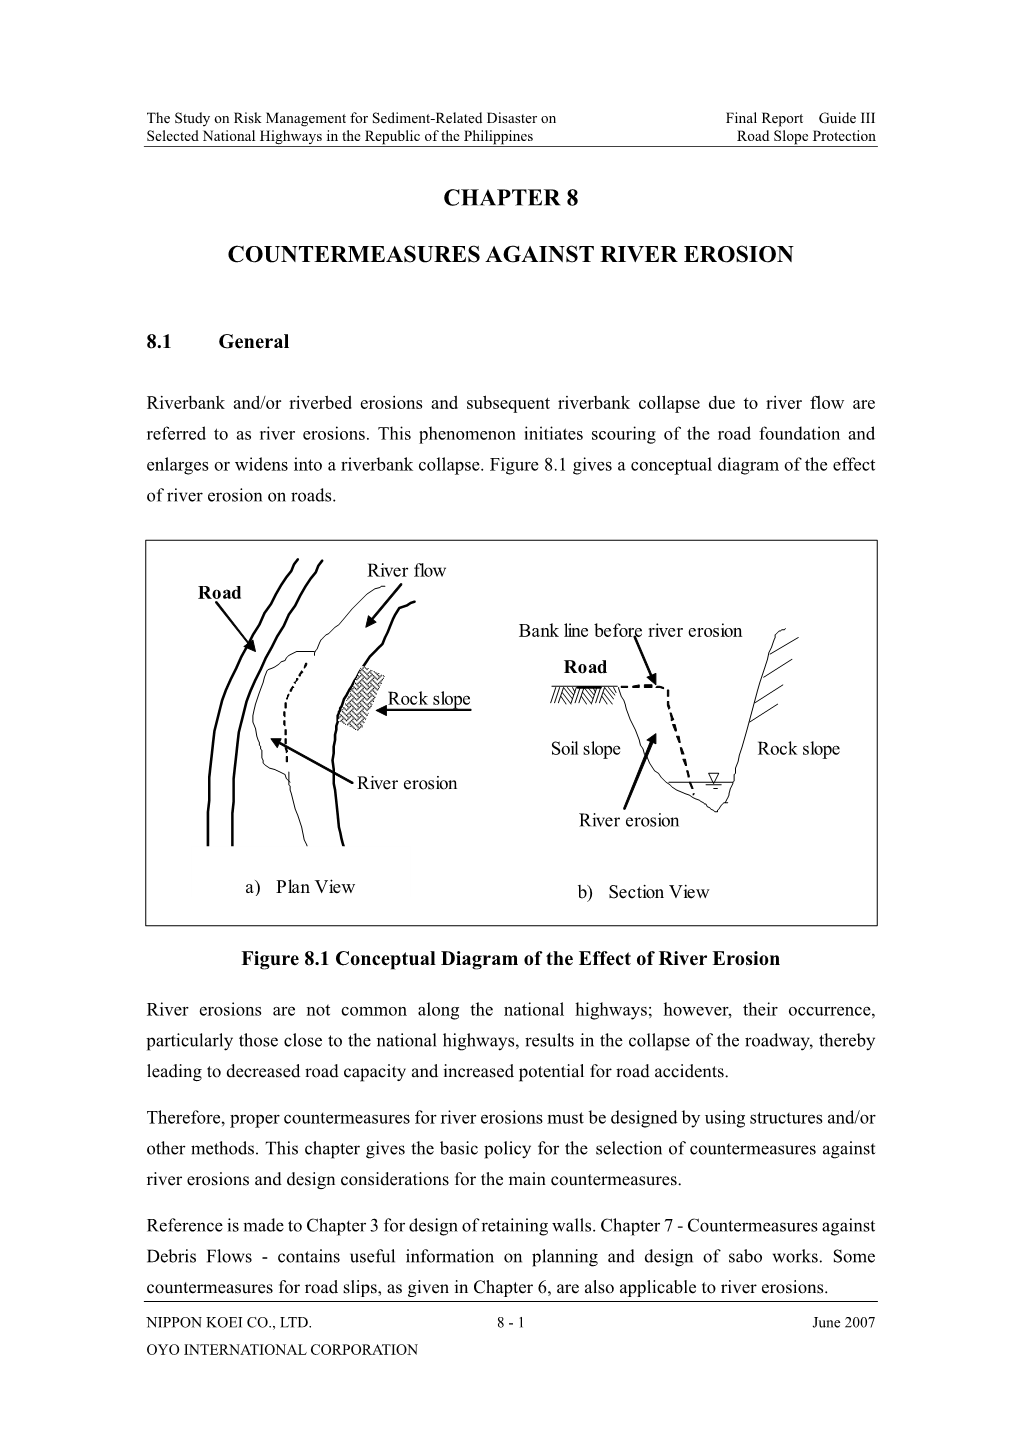 Chapter 8 Countermeasures Against River Erosion